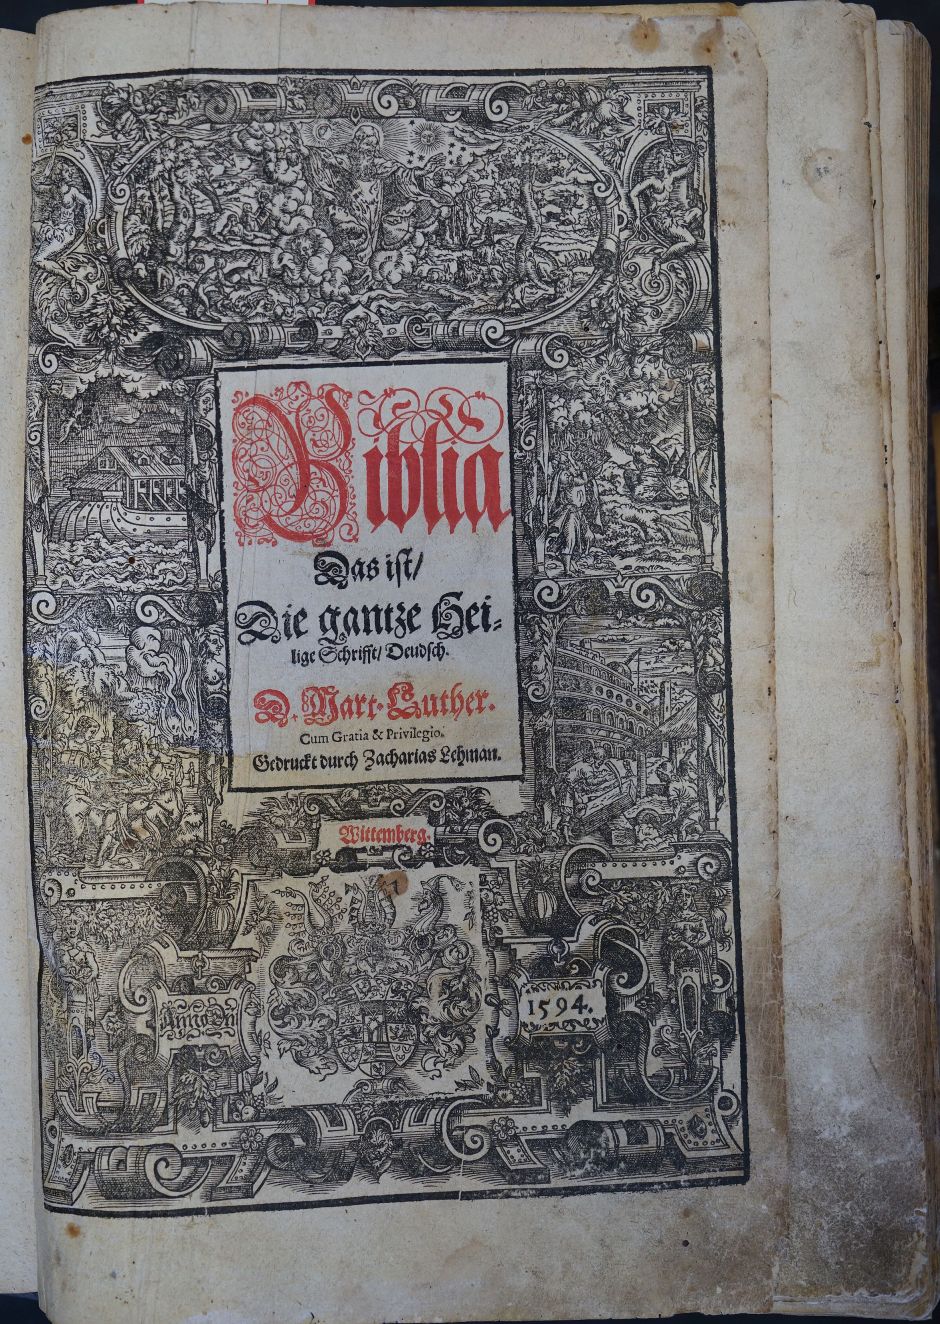 Lot 1069, Auction  115, Biblia germanica, Biblia